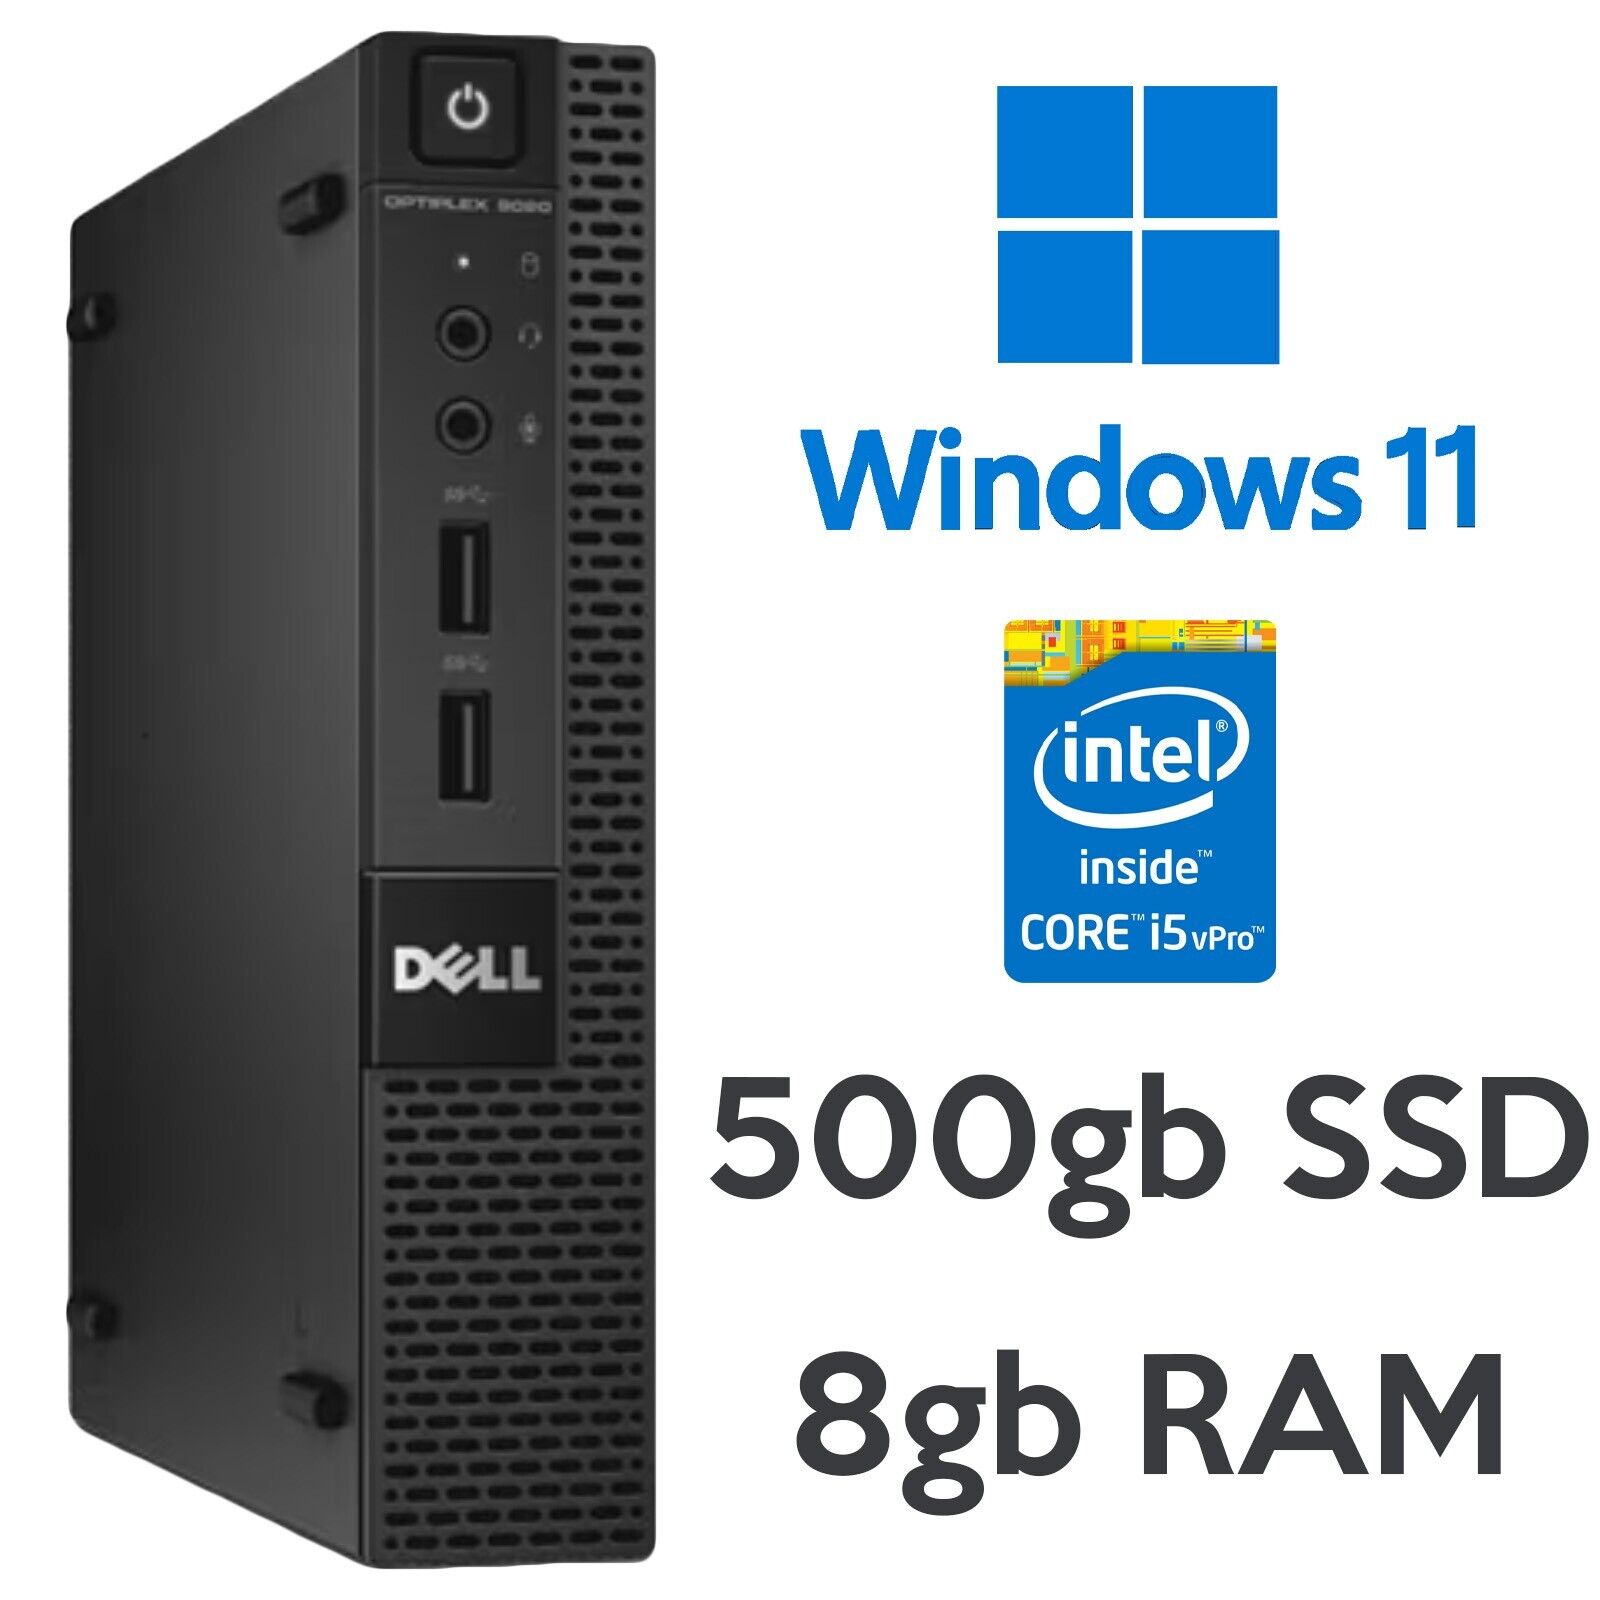 Dell 9020 Optiplex Micro-Intel Core i5 vPro - 500GB SSD H-8GB RAM - Windows 11